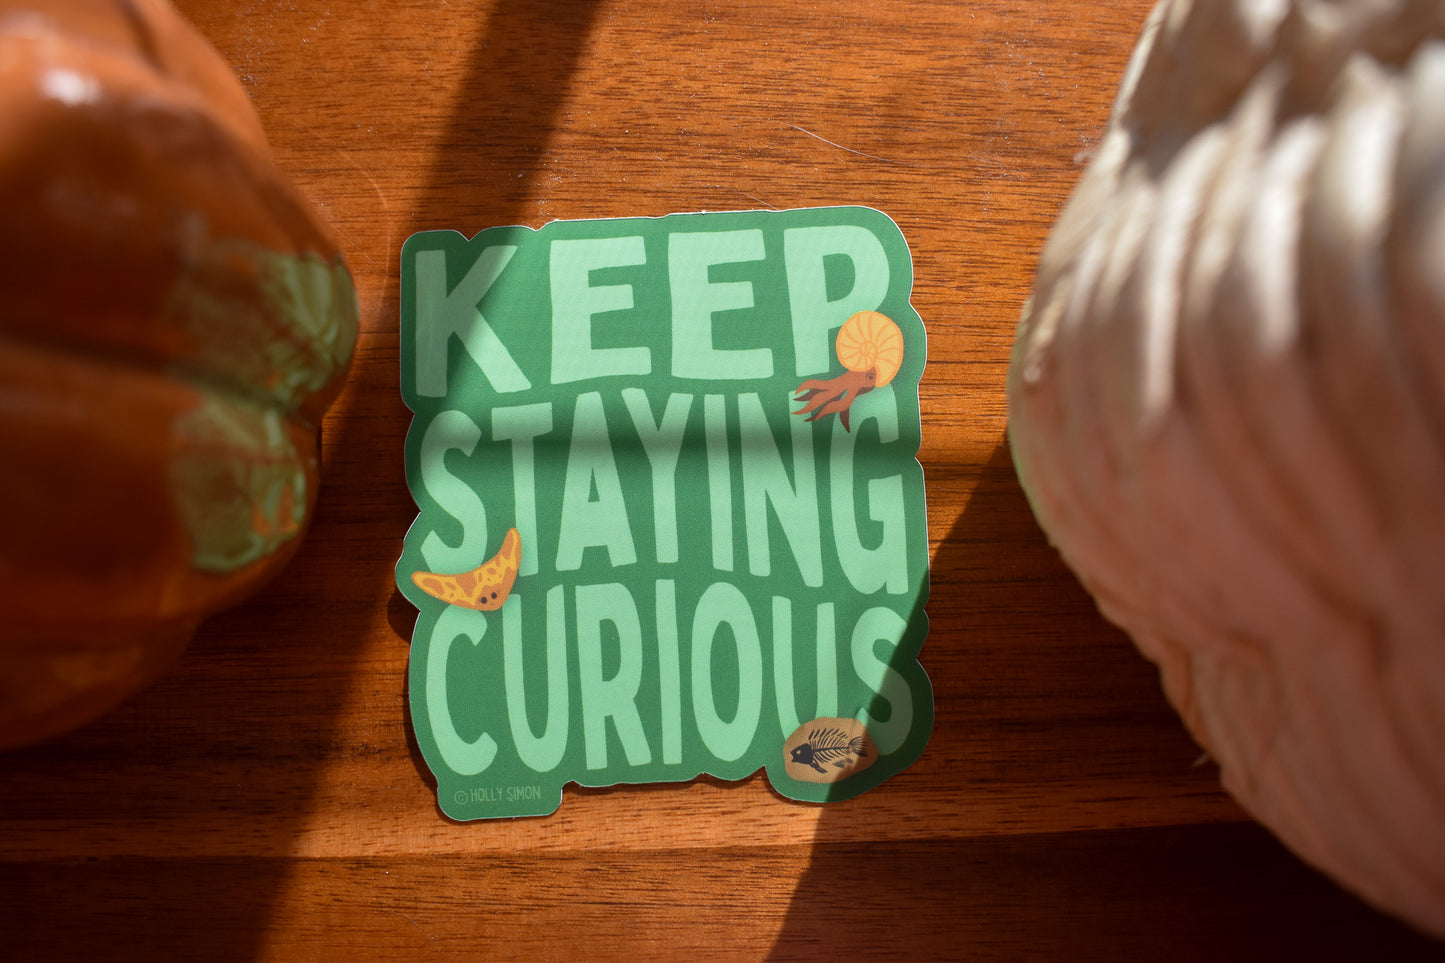 Keep Staying Curious! Matte Sticker